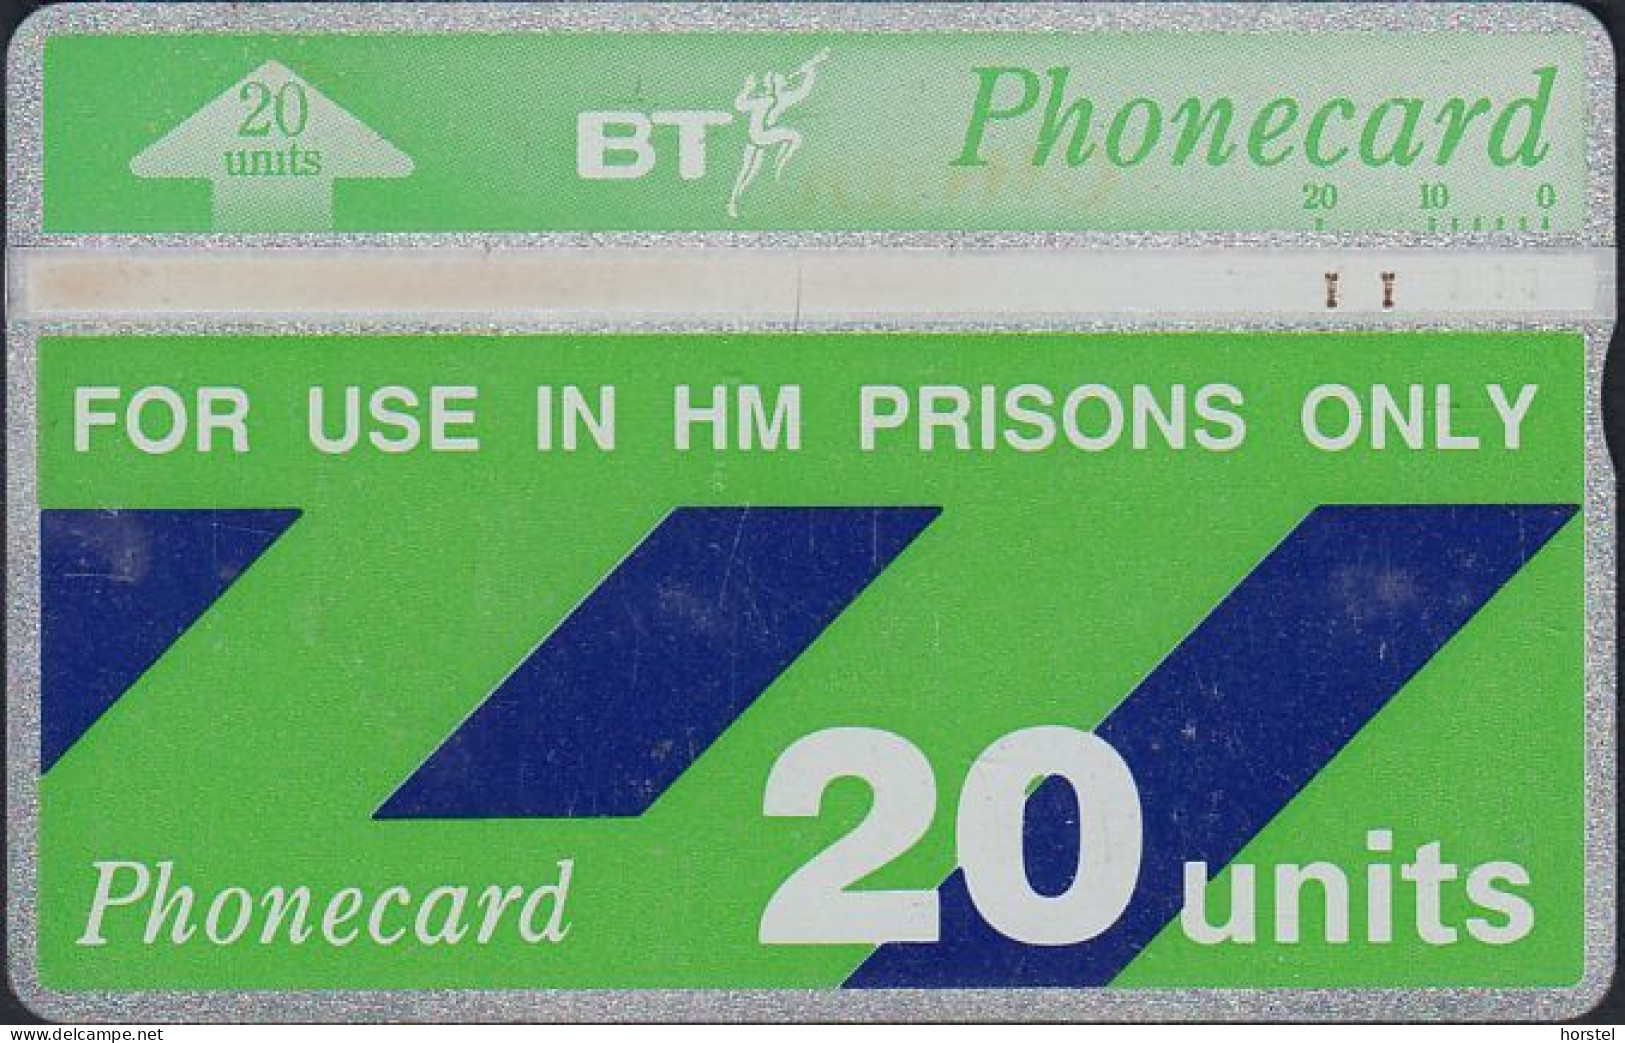 UK - British Telecom L&G H.M. Prison Card CUP005  (212E)  20 Units - [ 3] Haftanstalten